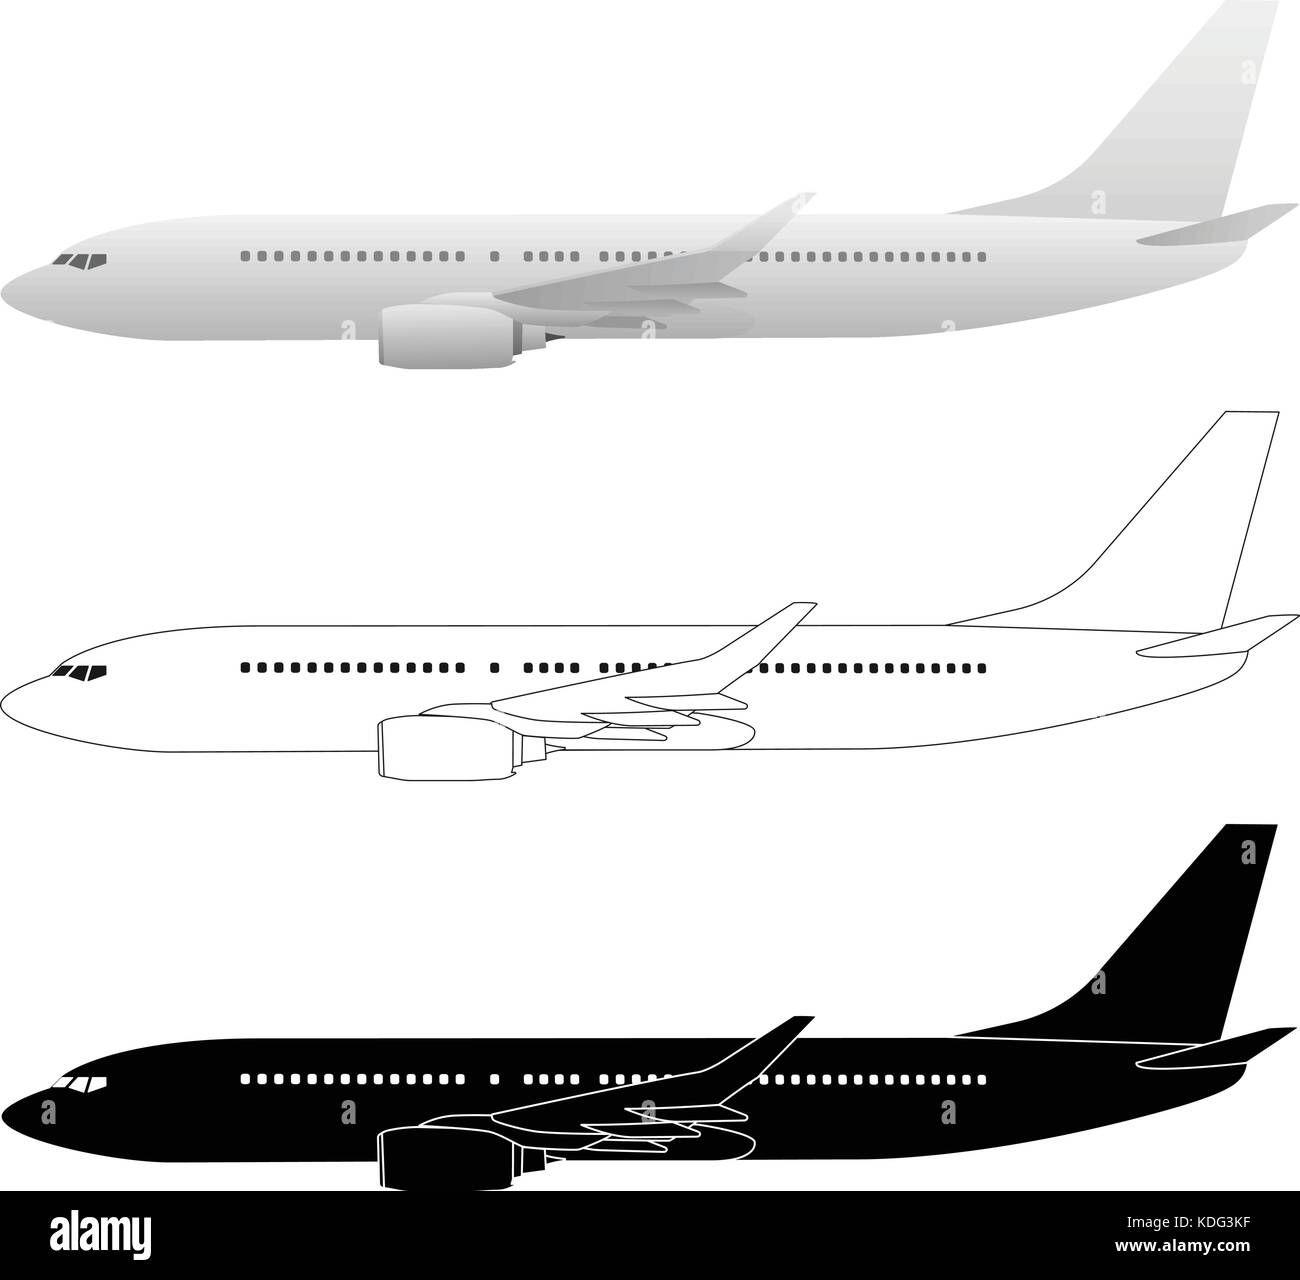 Commercial Airliner Passenger Jet Vector Illustrations Stock Vector